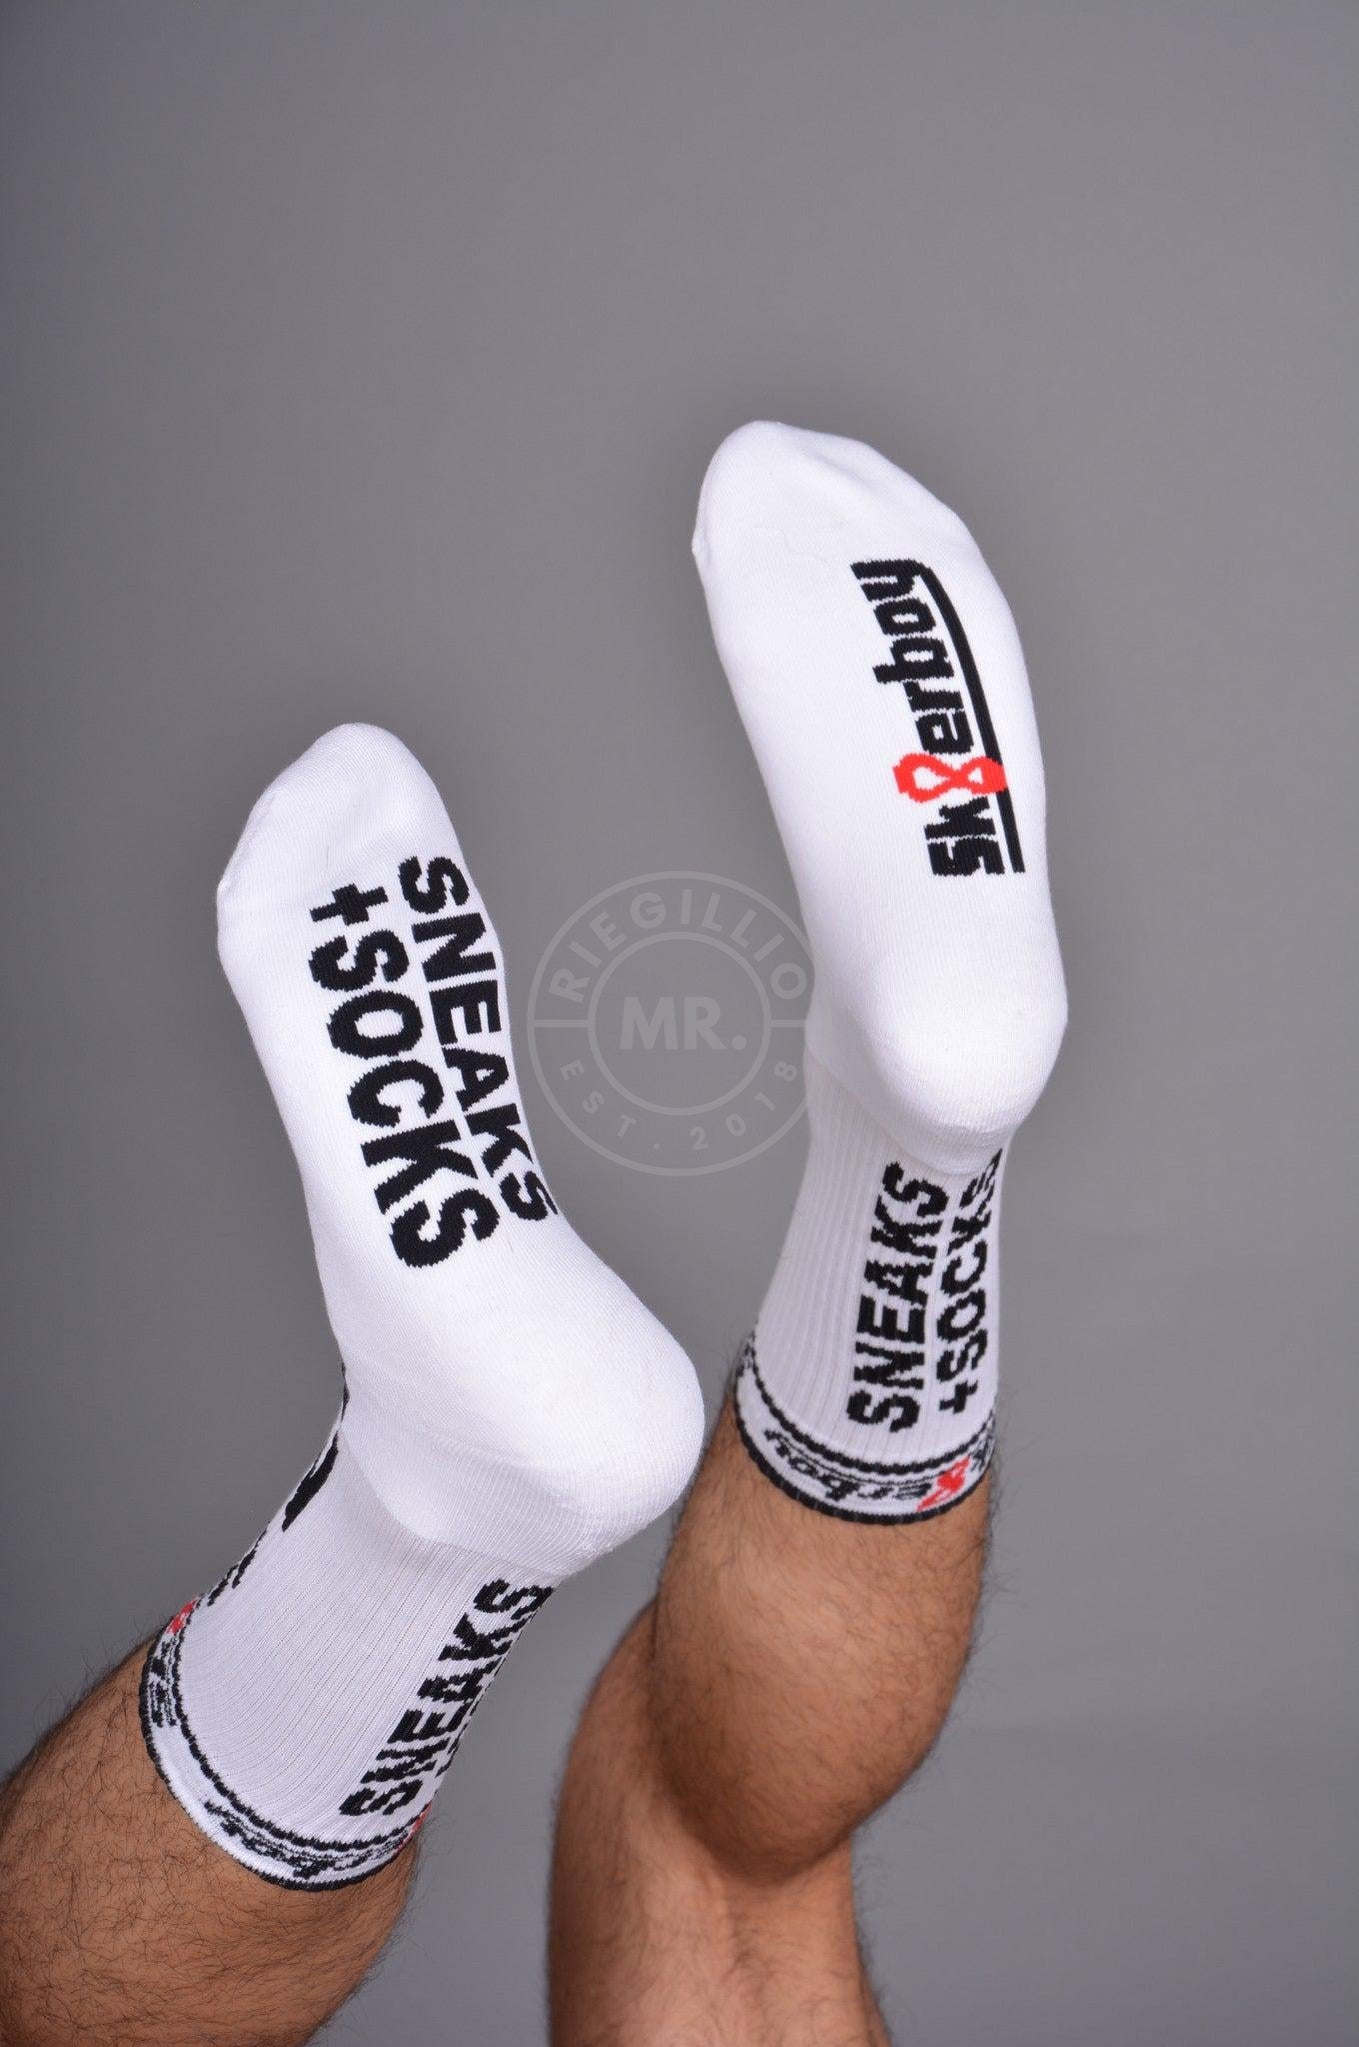 White Sk8erboy PUPPY Socks by MR. Riegillio